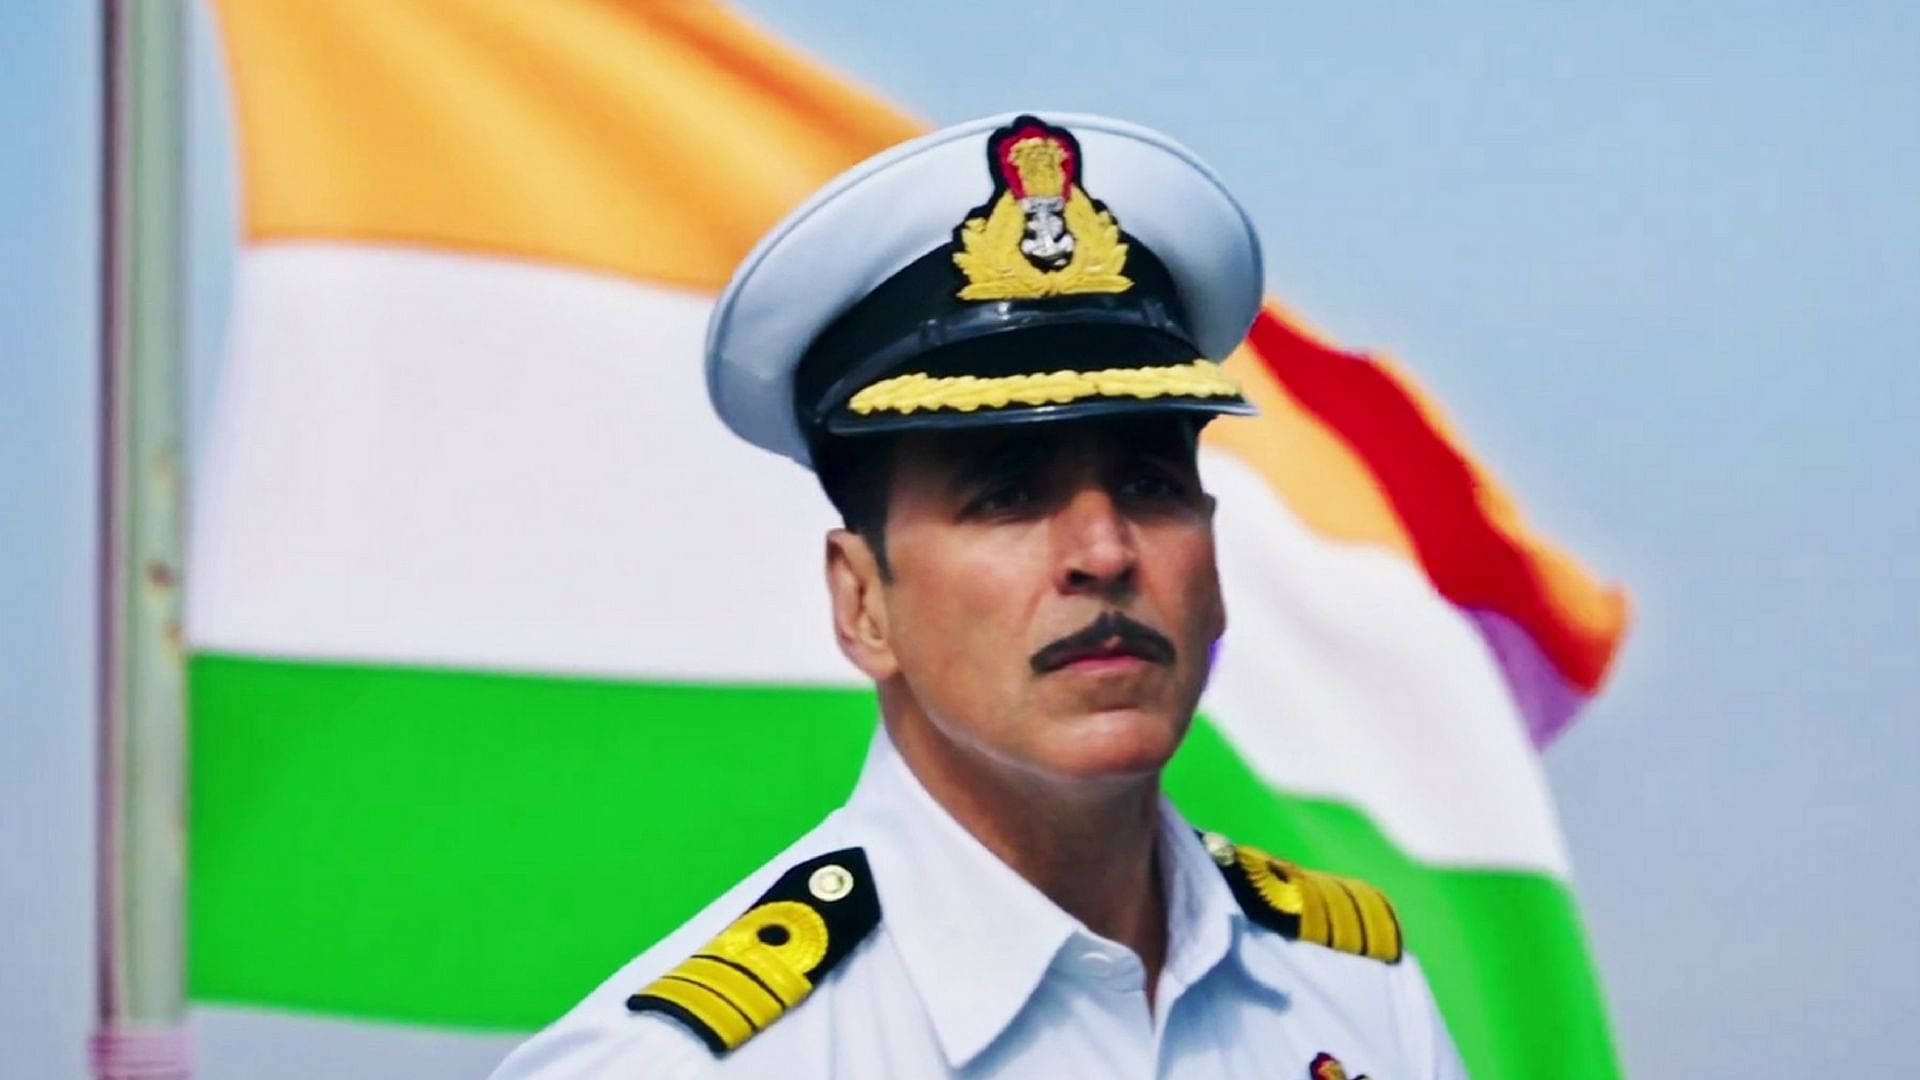 Akshay Kumar In Marine Uniform Background